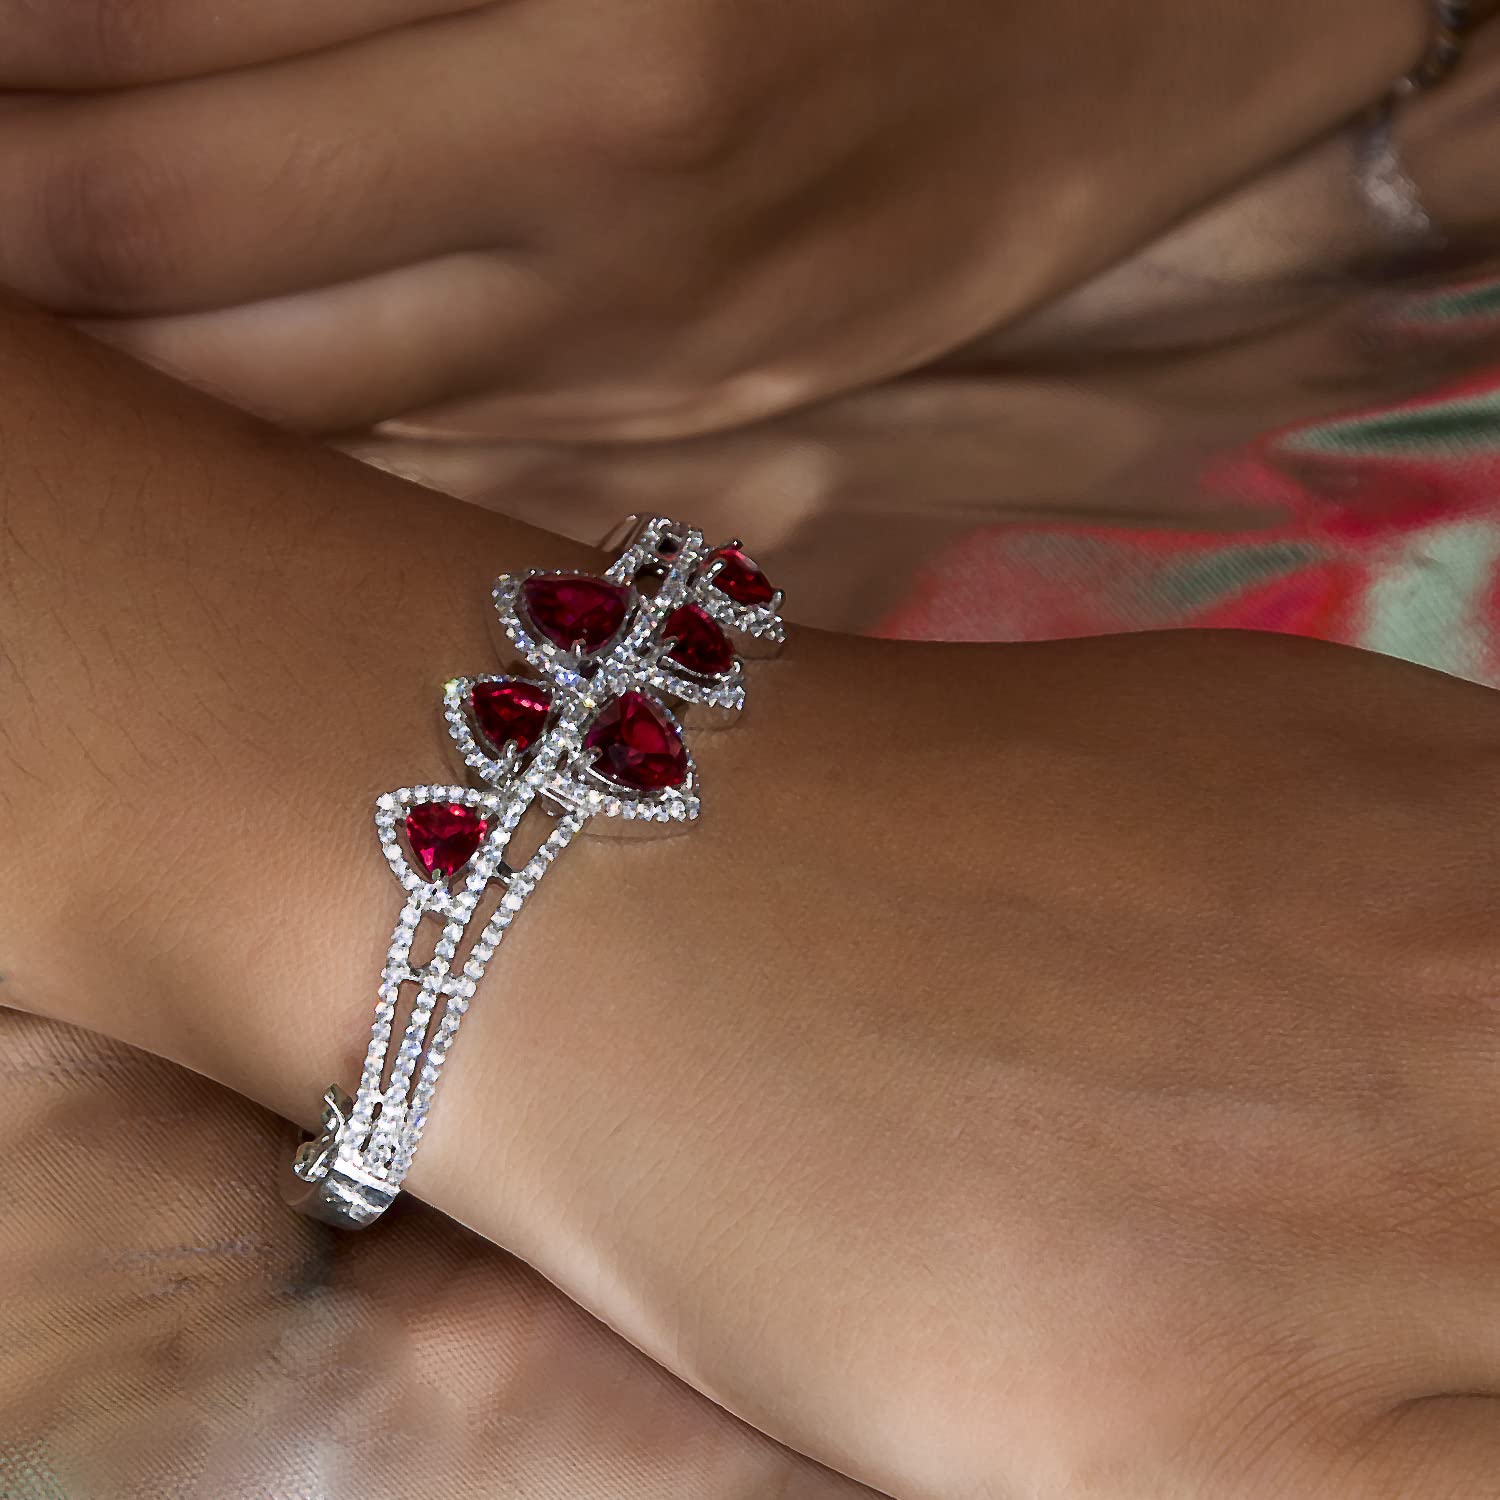 Pin by rahimakh on cute | Beautiful jewelry, Girly jewelry, Simple jewelry